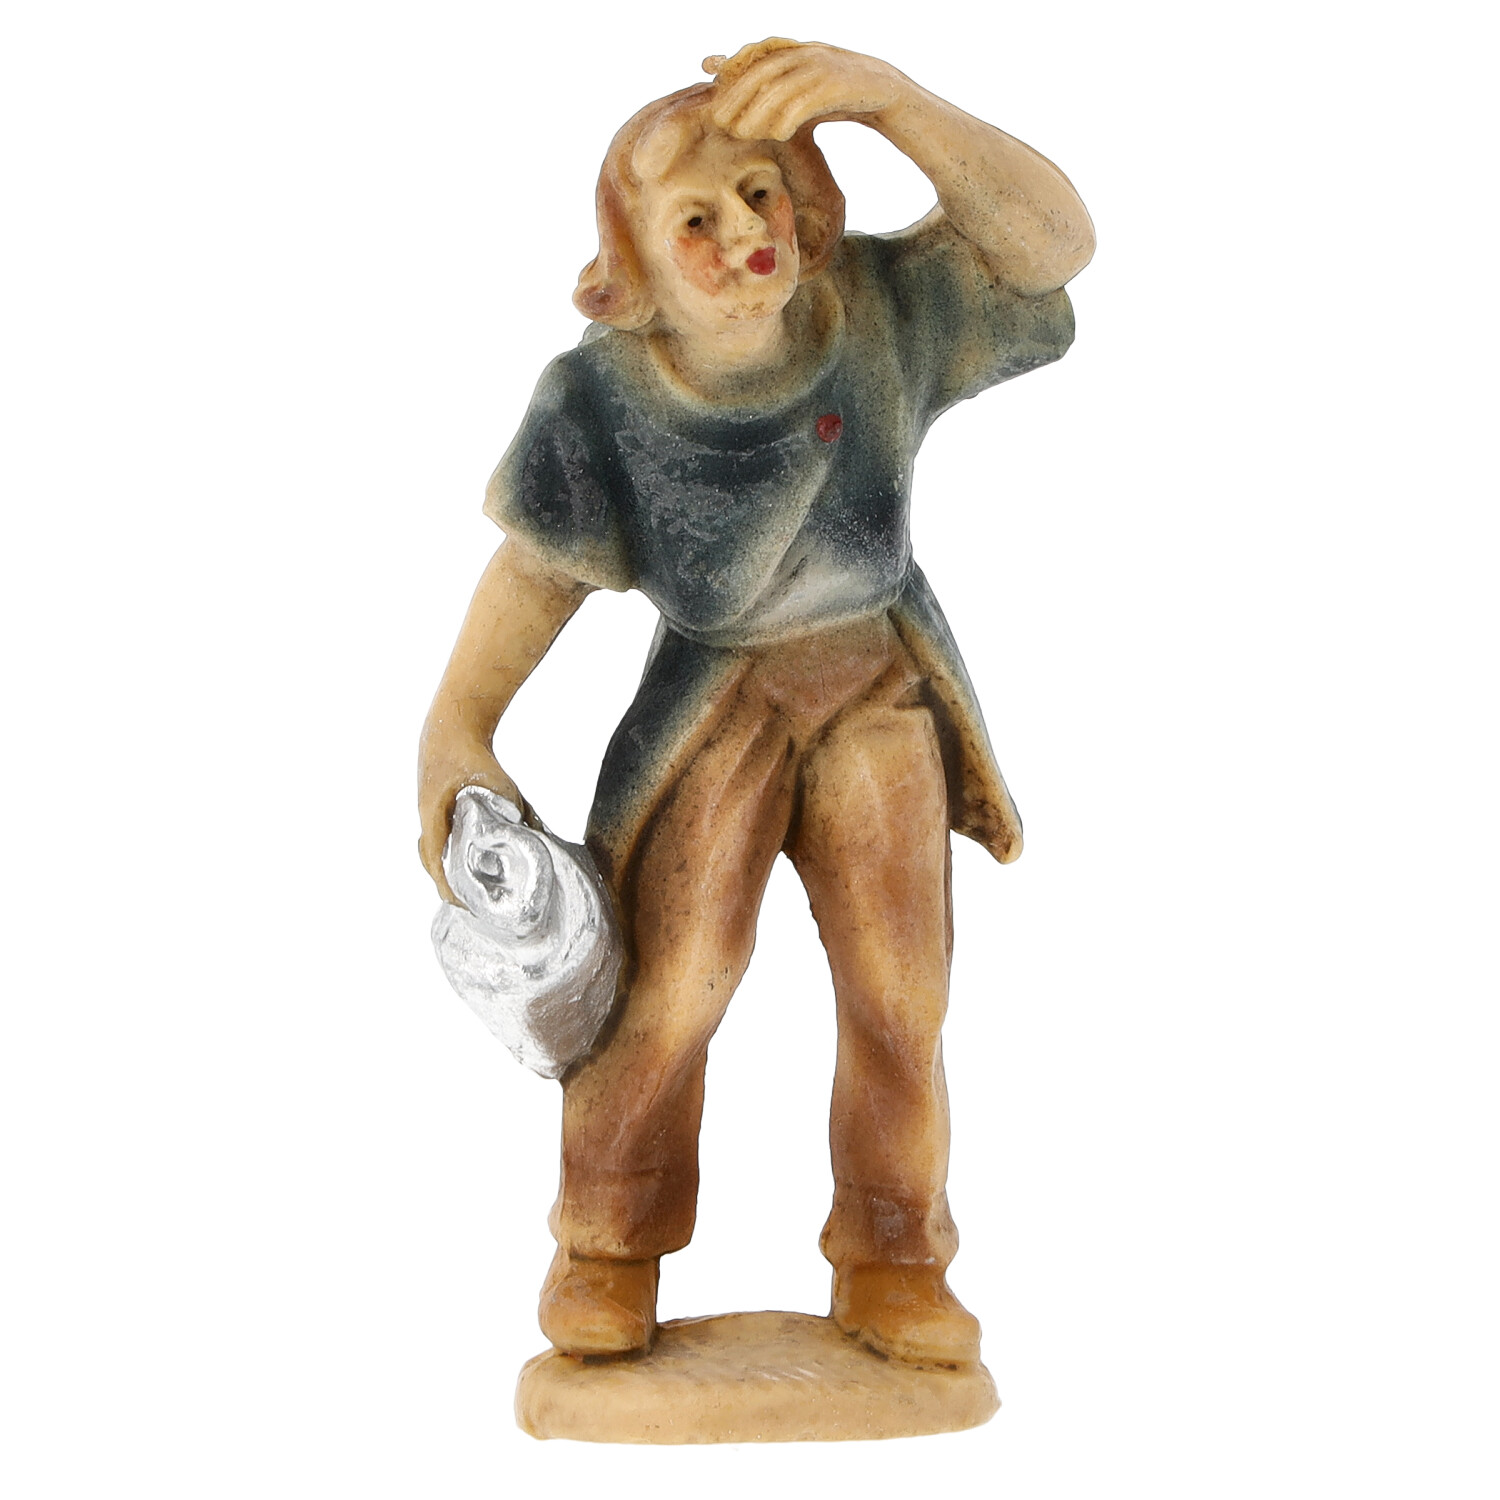 Shepherd with jug - Marolin Plastik - Resin Nativity figure - made in Germany